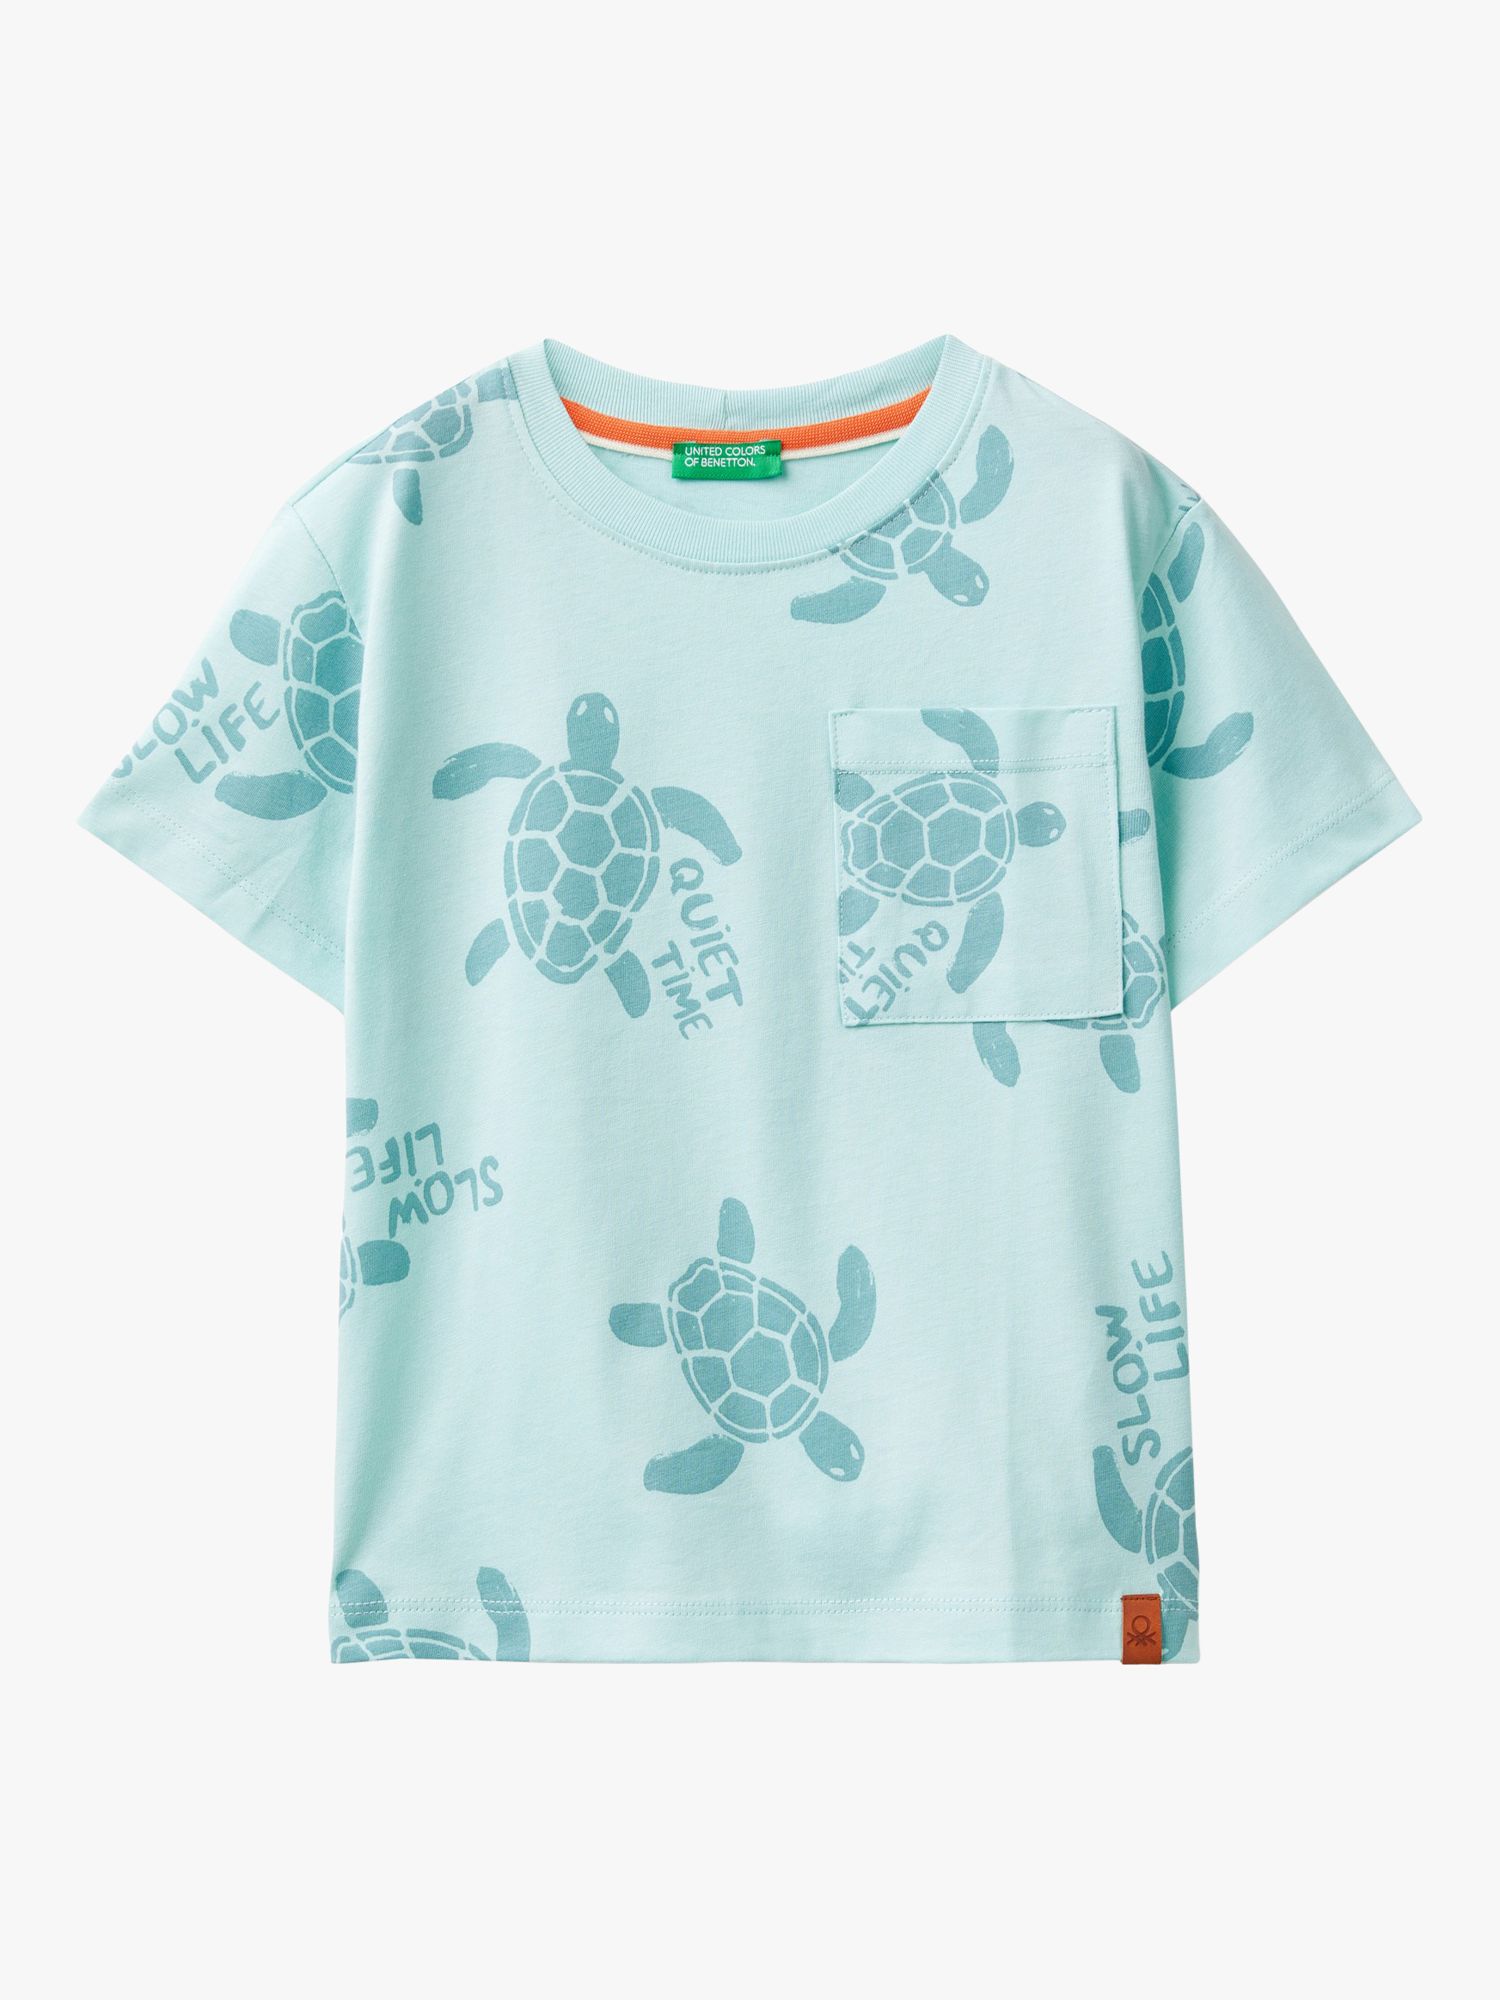 Benetton Kids' Turtle Print Pocket Detail T-Shirt, Light Blue Powder, 18-24 months